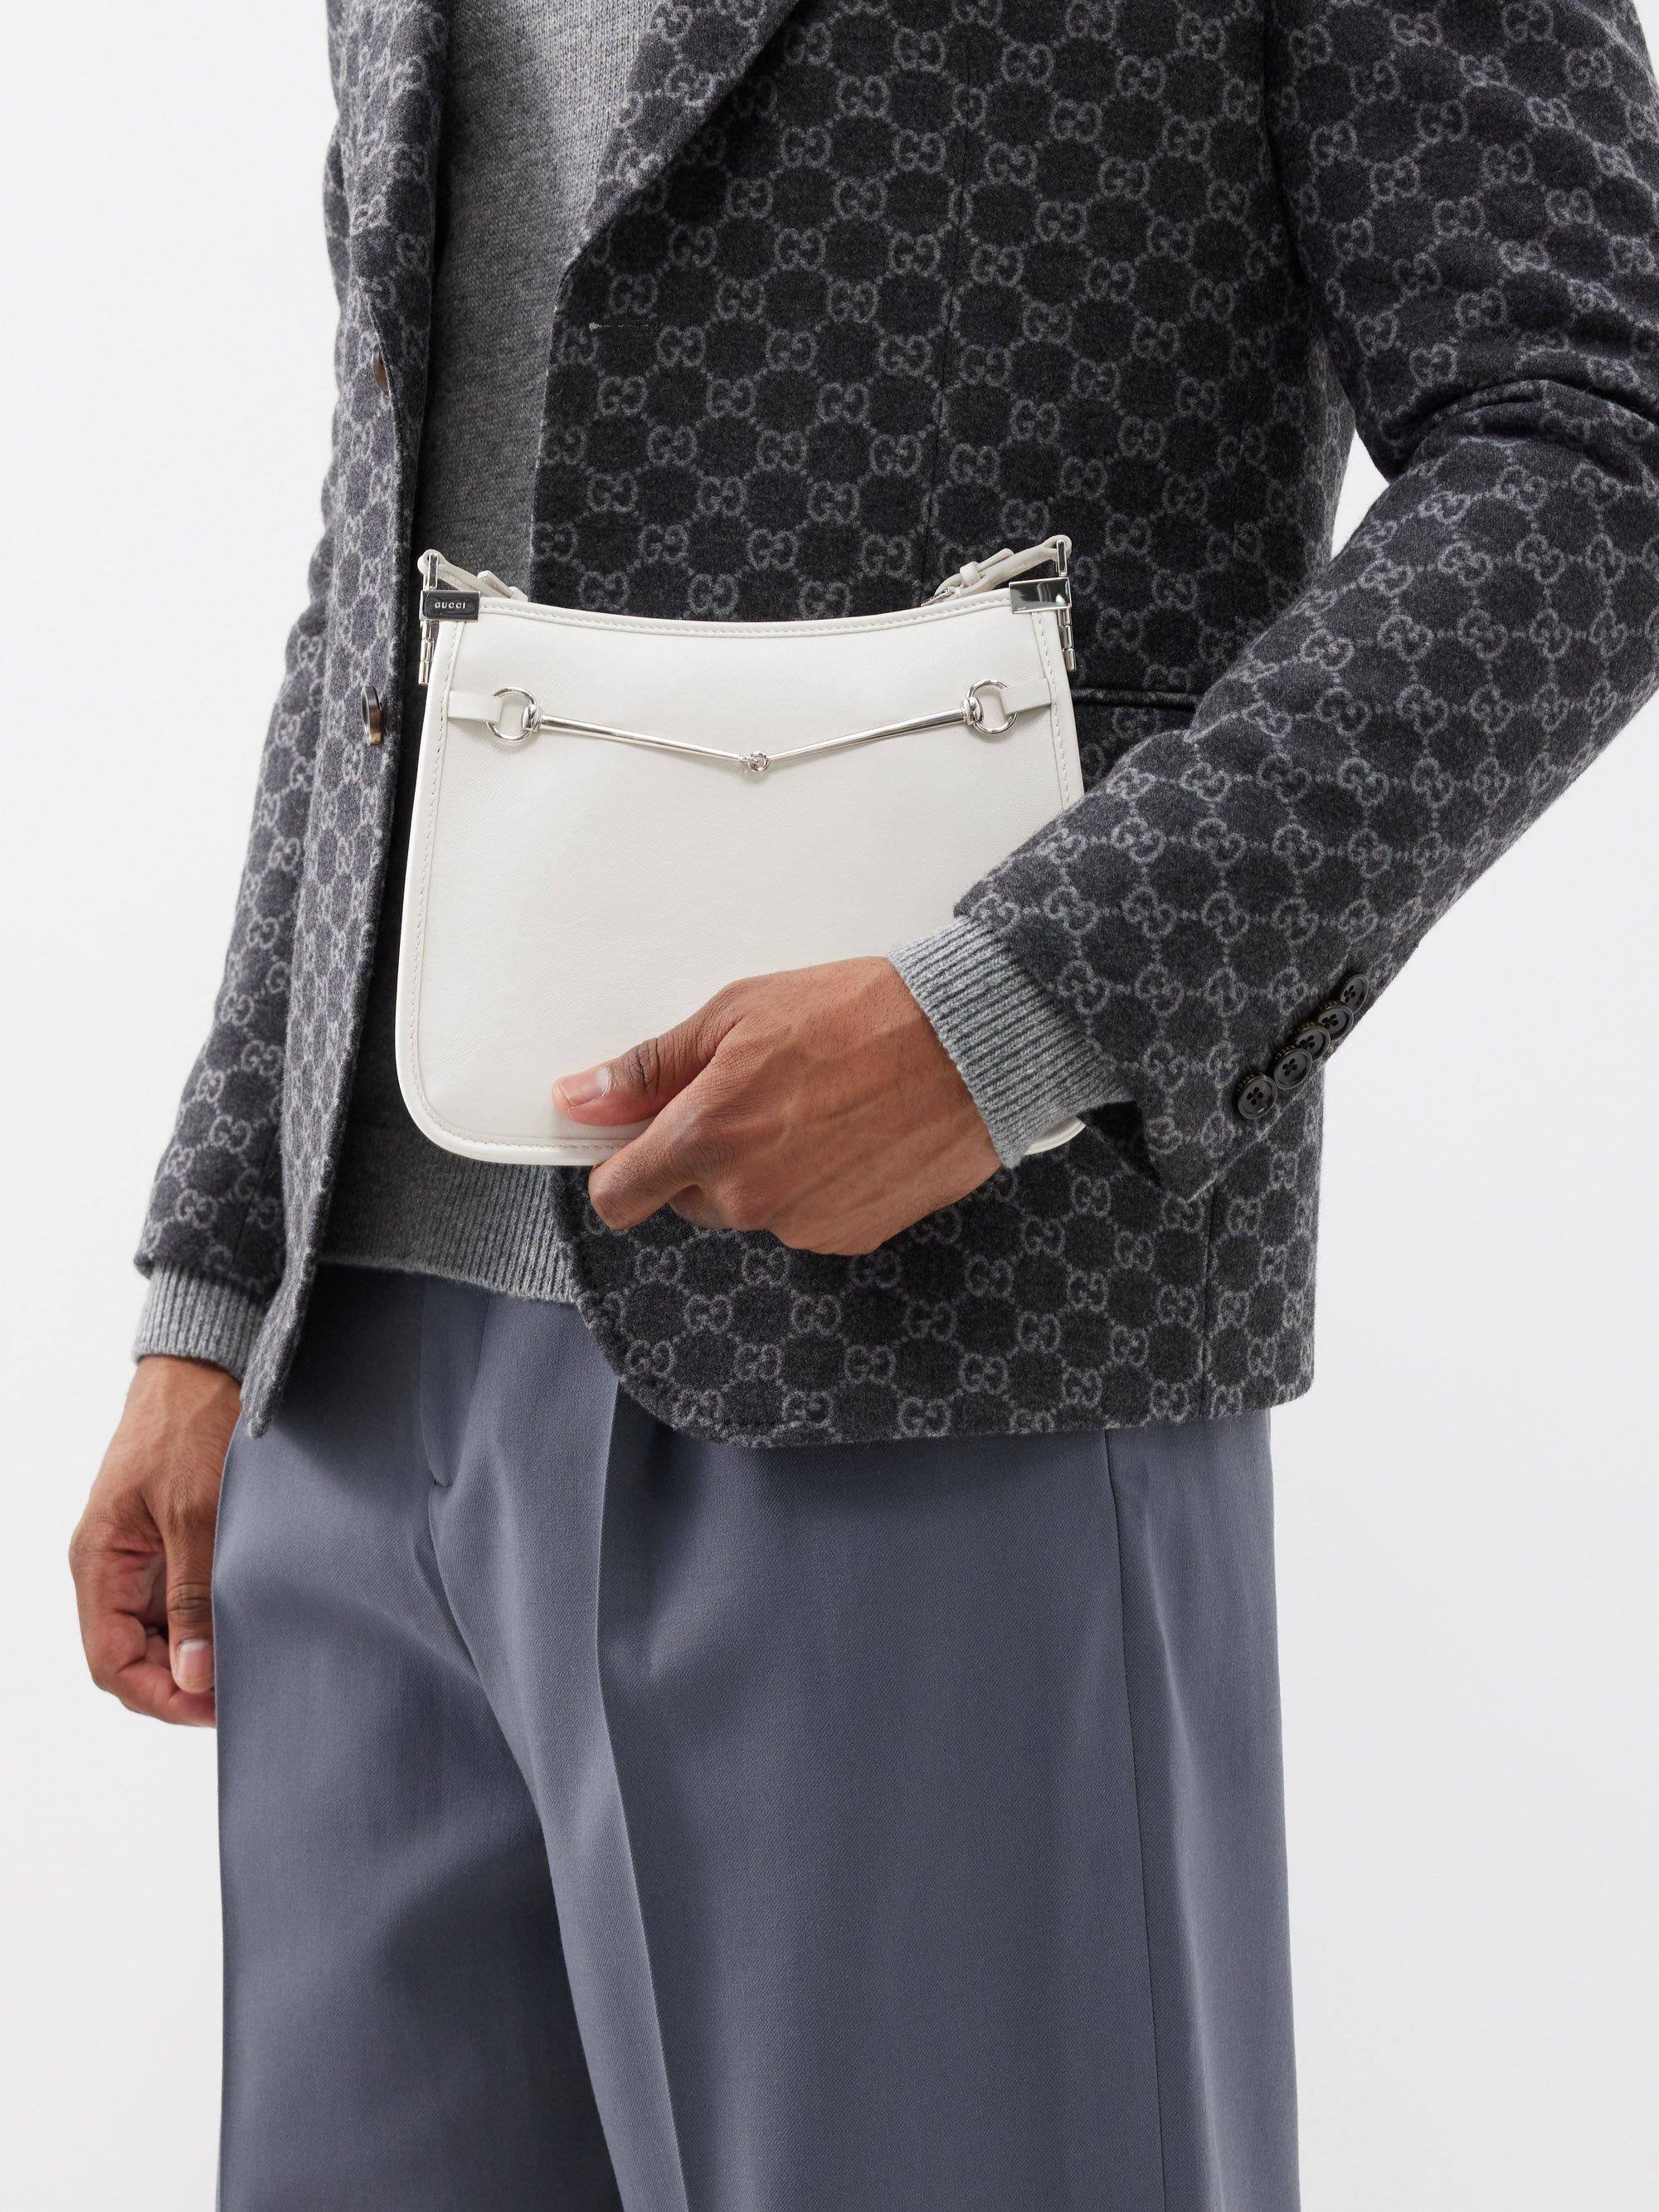 Gucci Horsebit Slim small shoulder bag in white leather